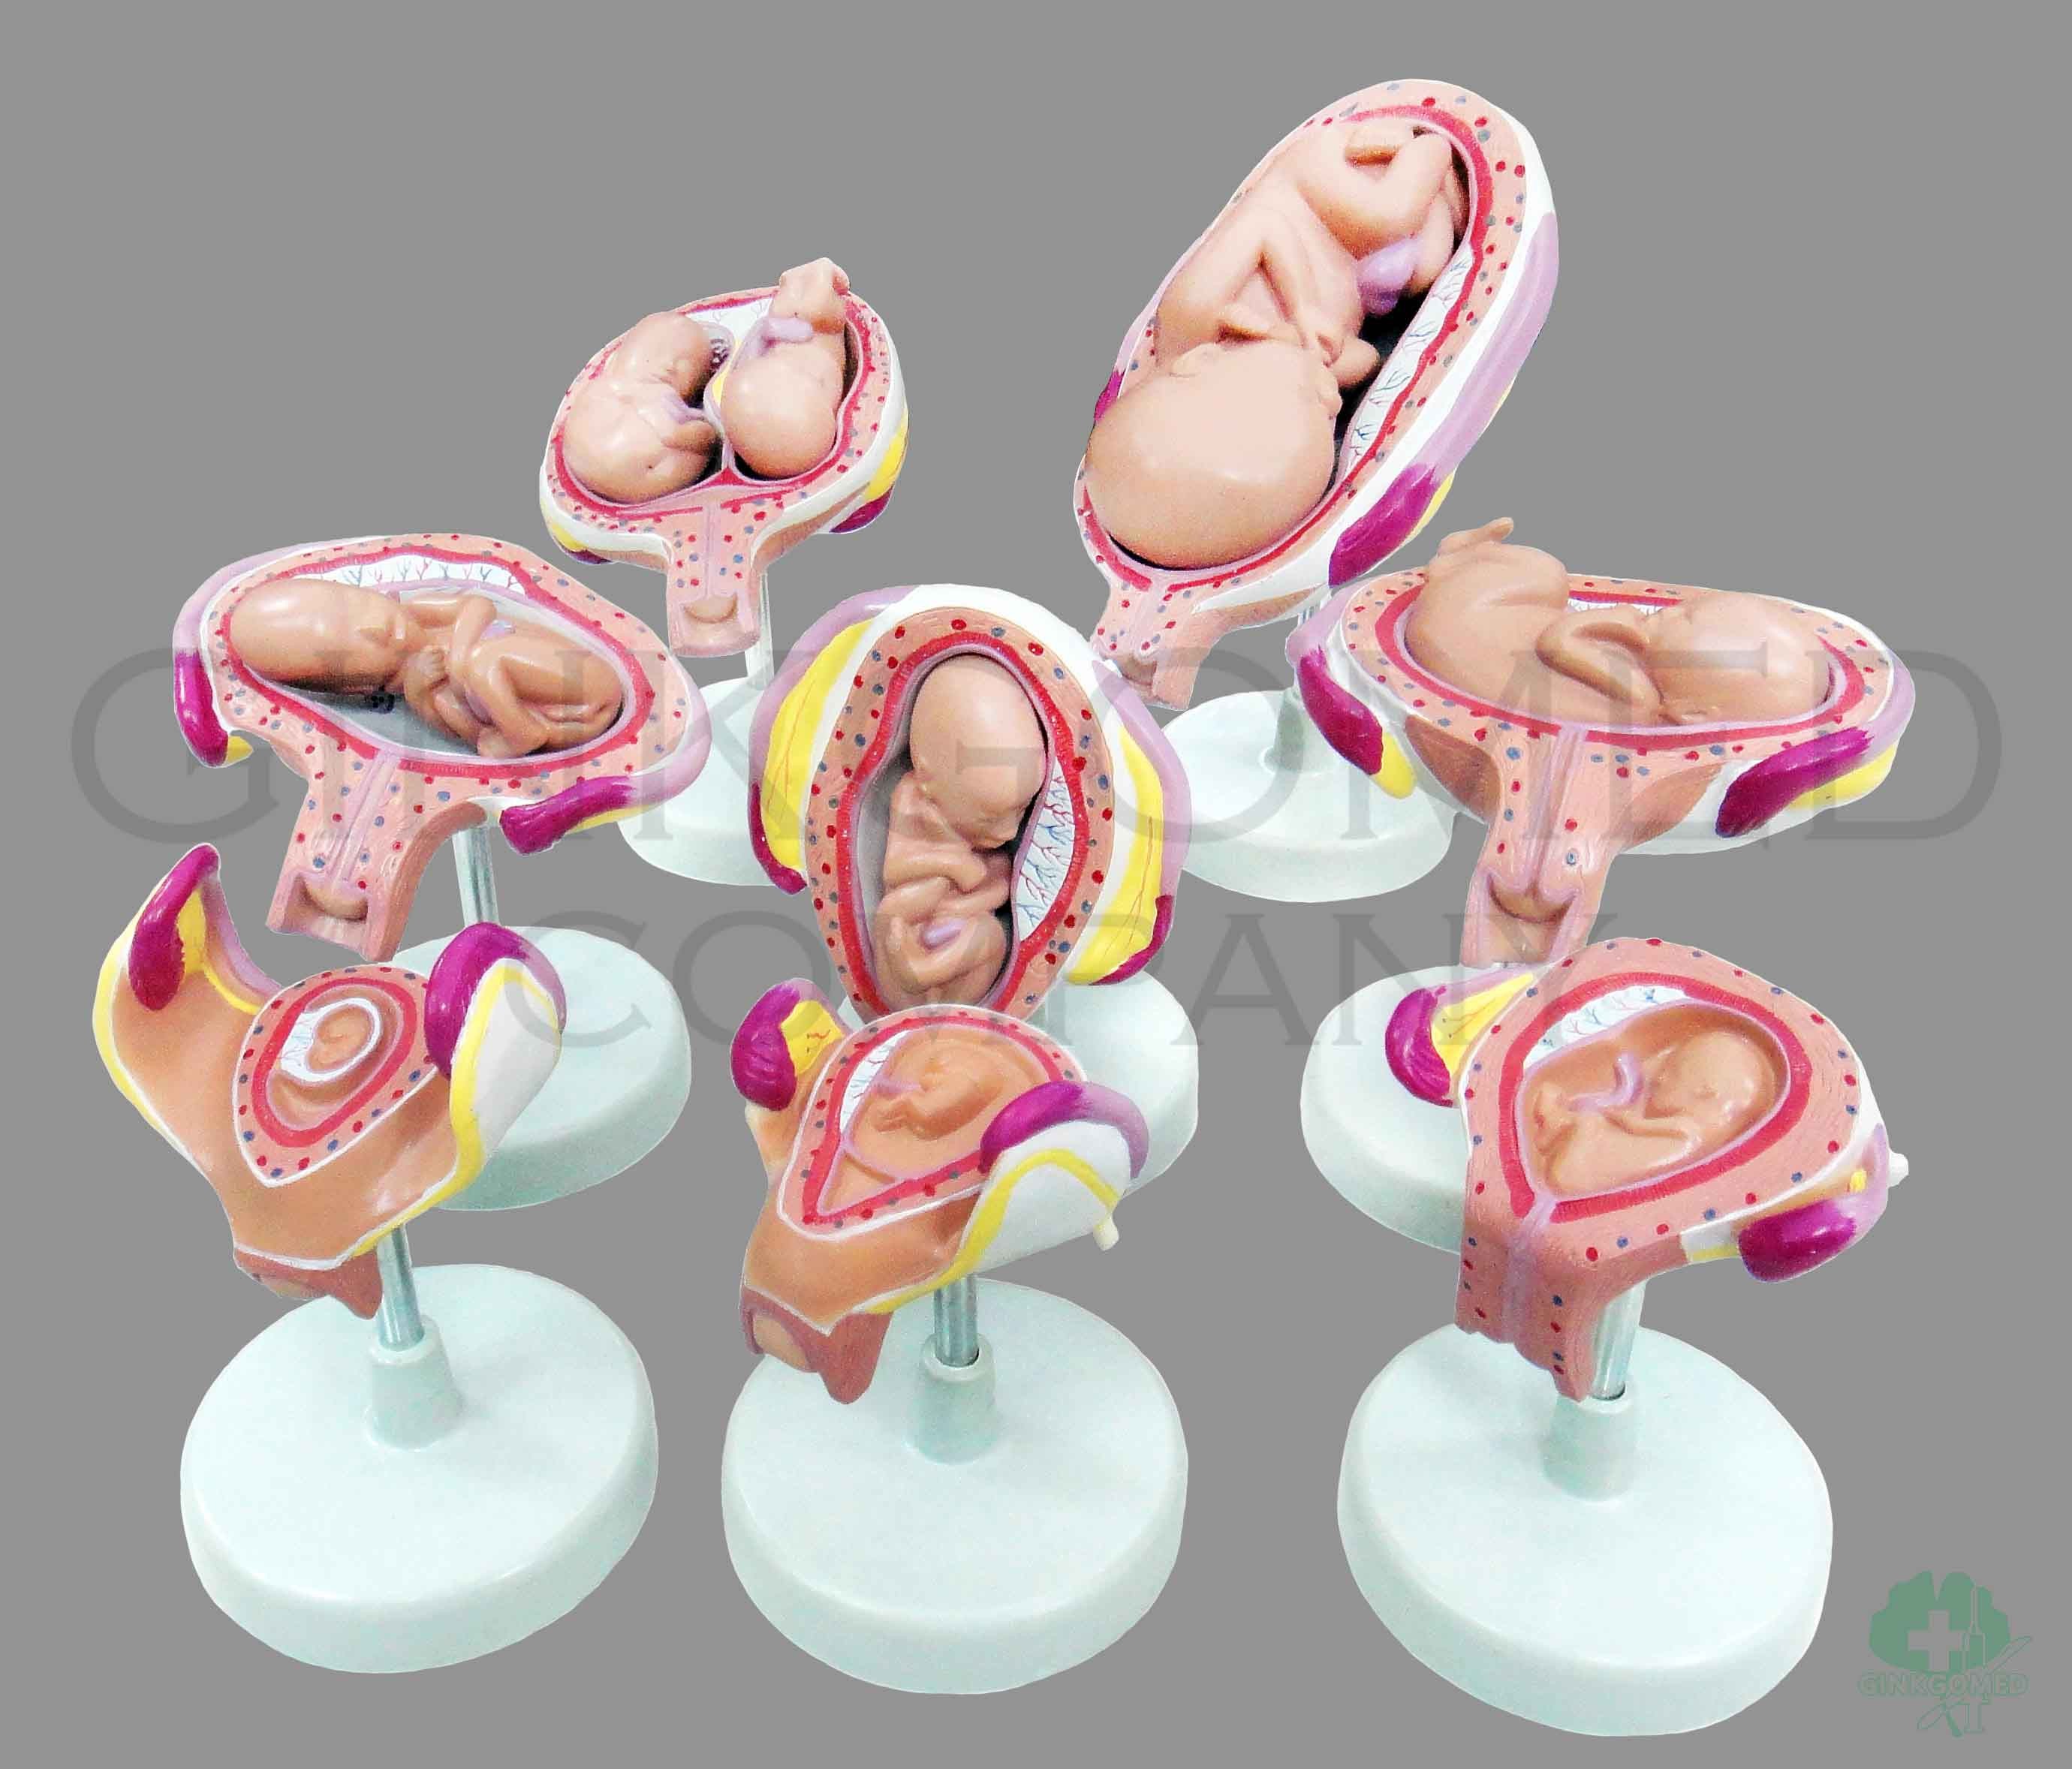 GM-060012  Fetal Development